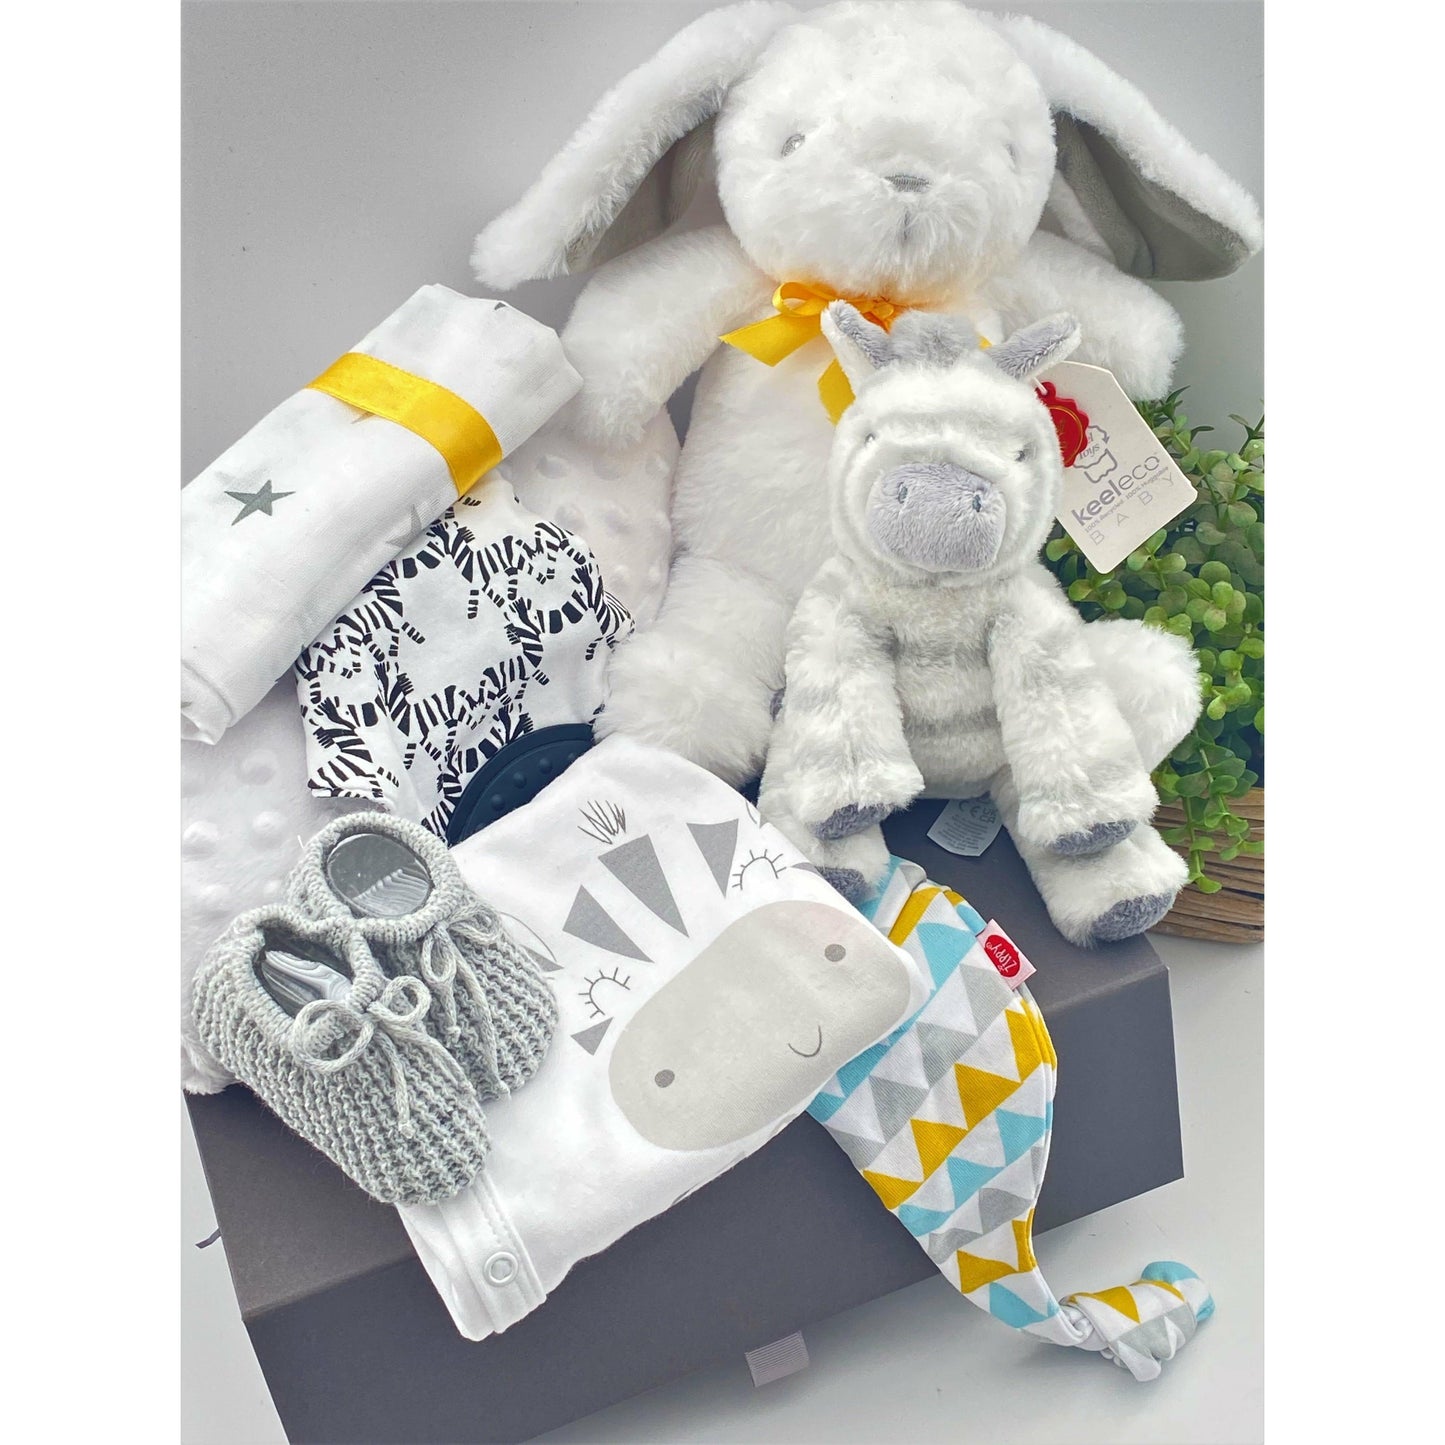 Unisex Newborn Baby Gift Hamper, Bunny Cuddly Toy, White Baby Blanket, Baby Shower Gifts, Baby Keepsake Box In Grey